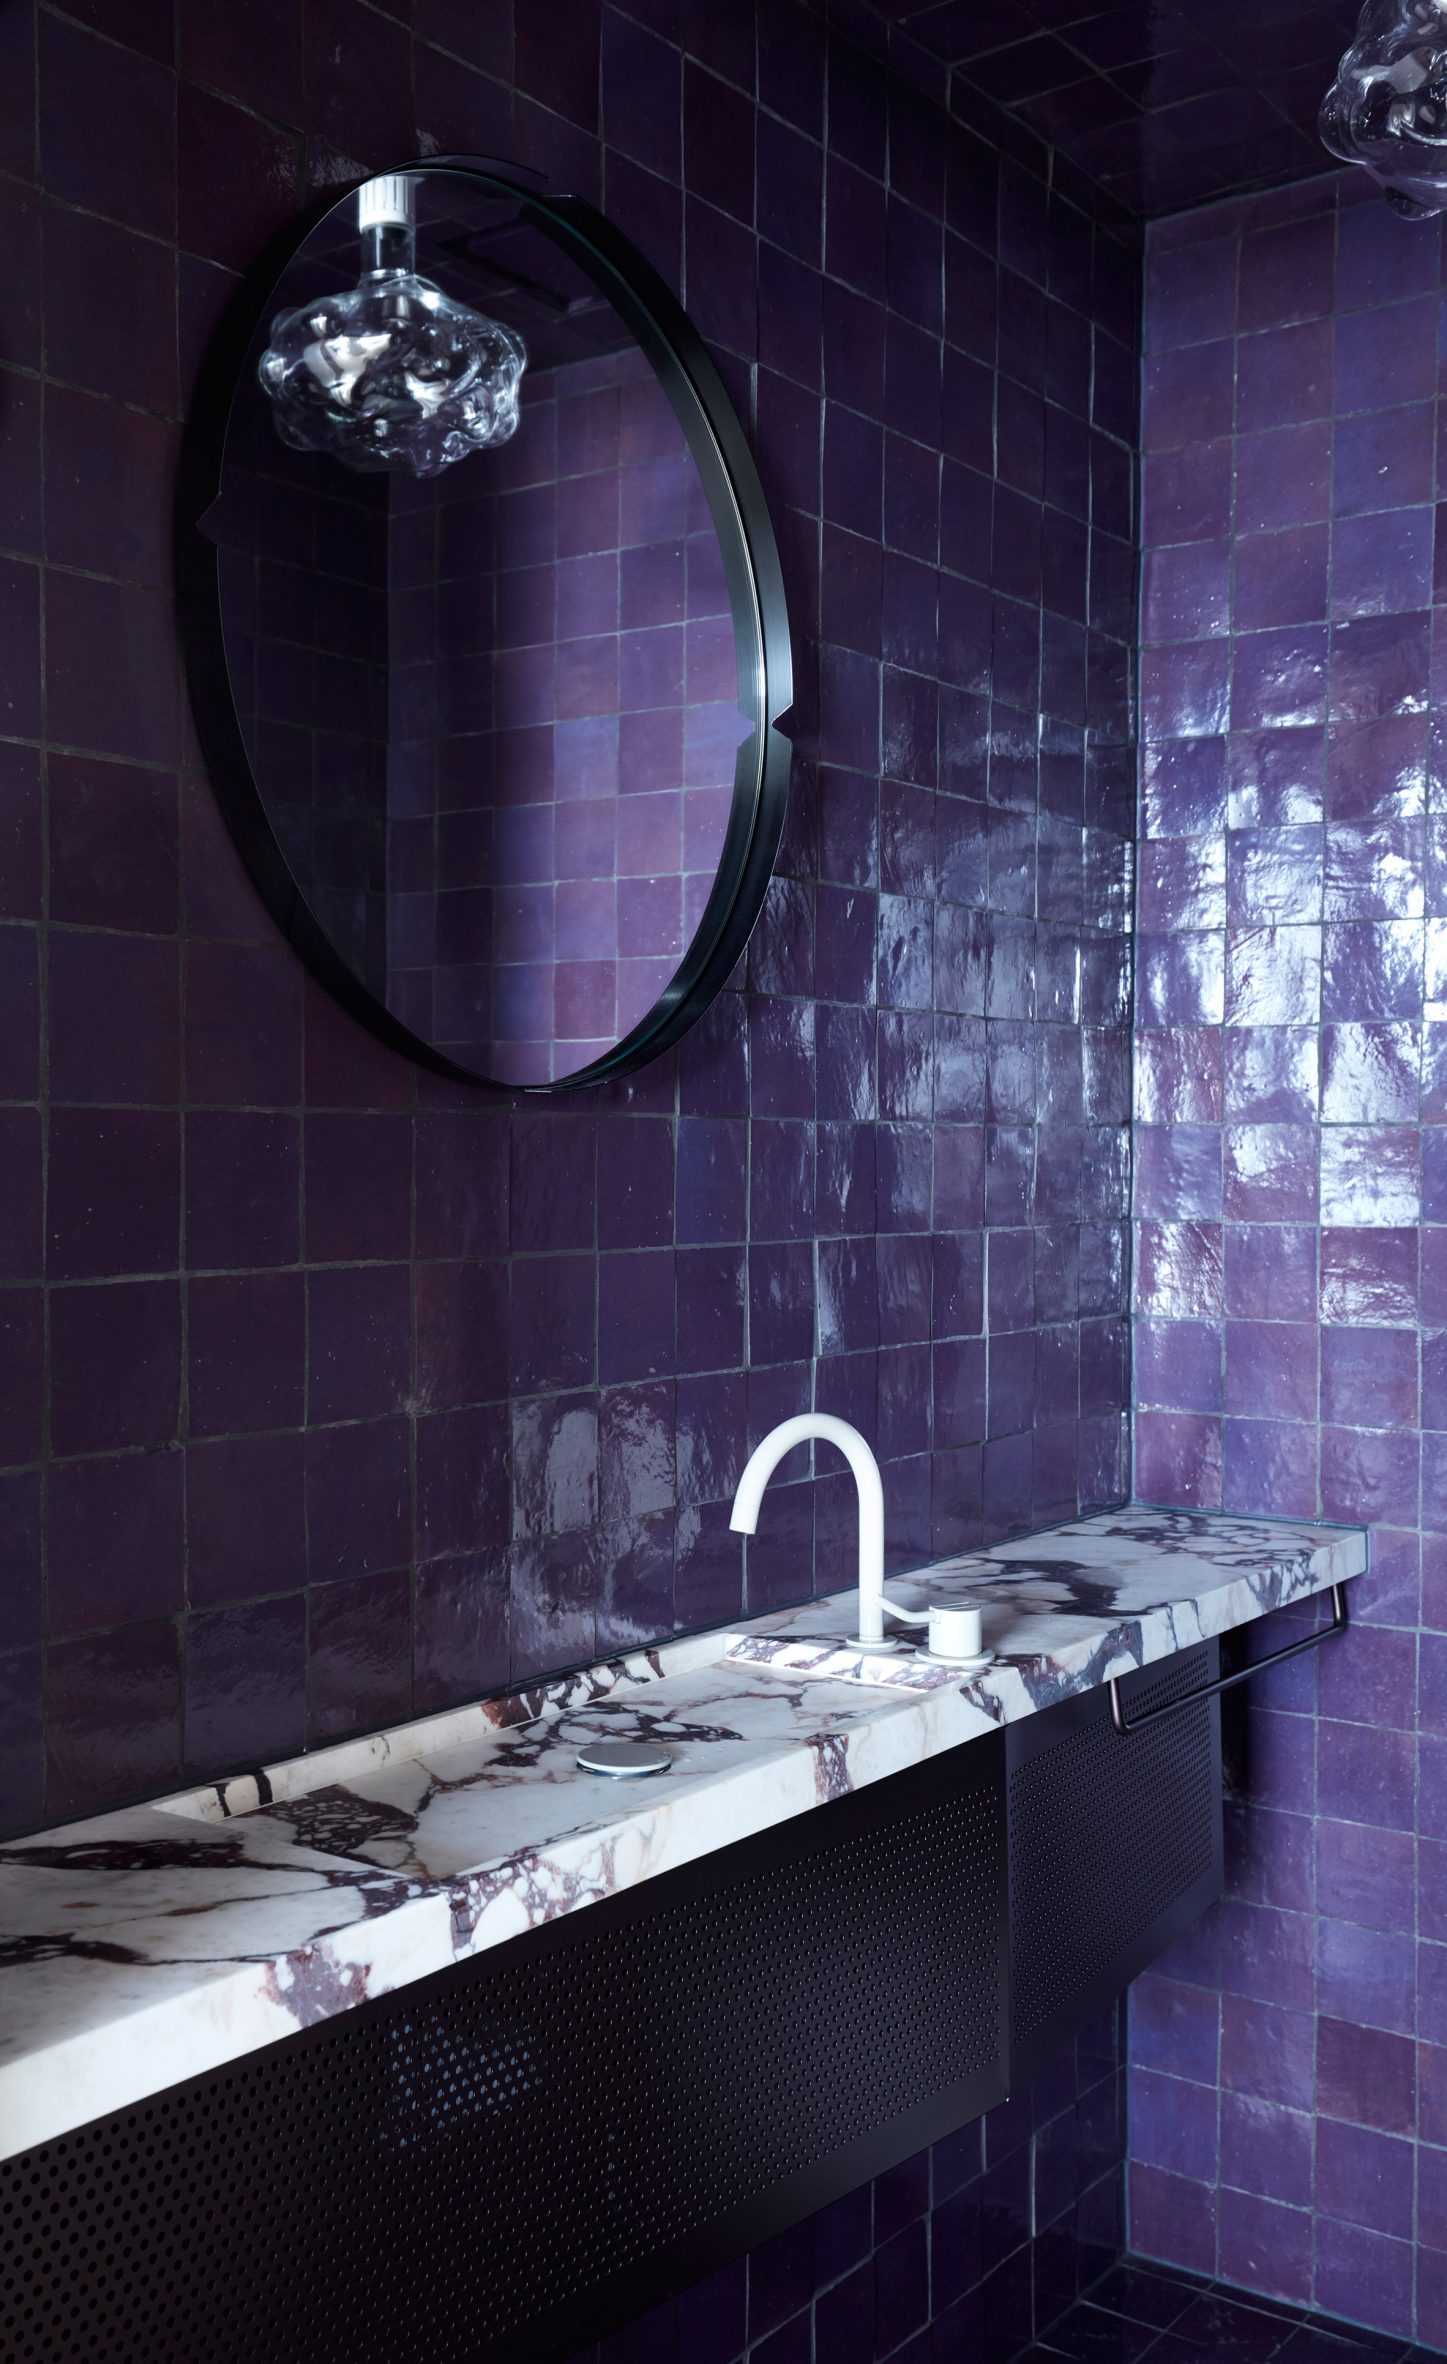 Bathroom interior of Dream Weaver penthouse with deep purple tiles